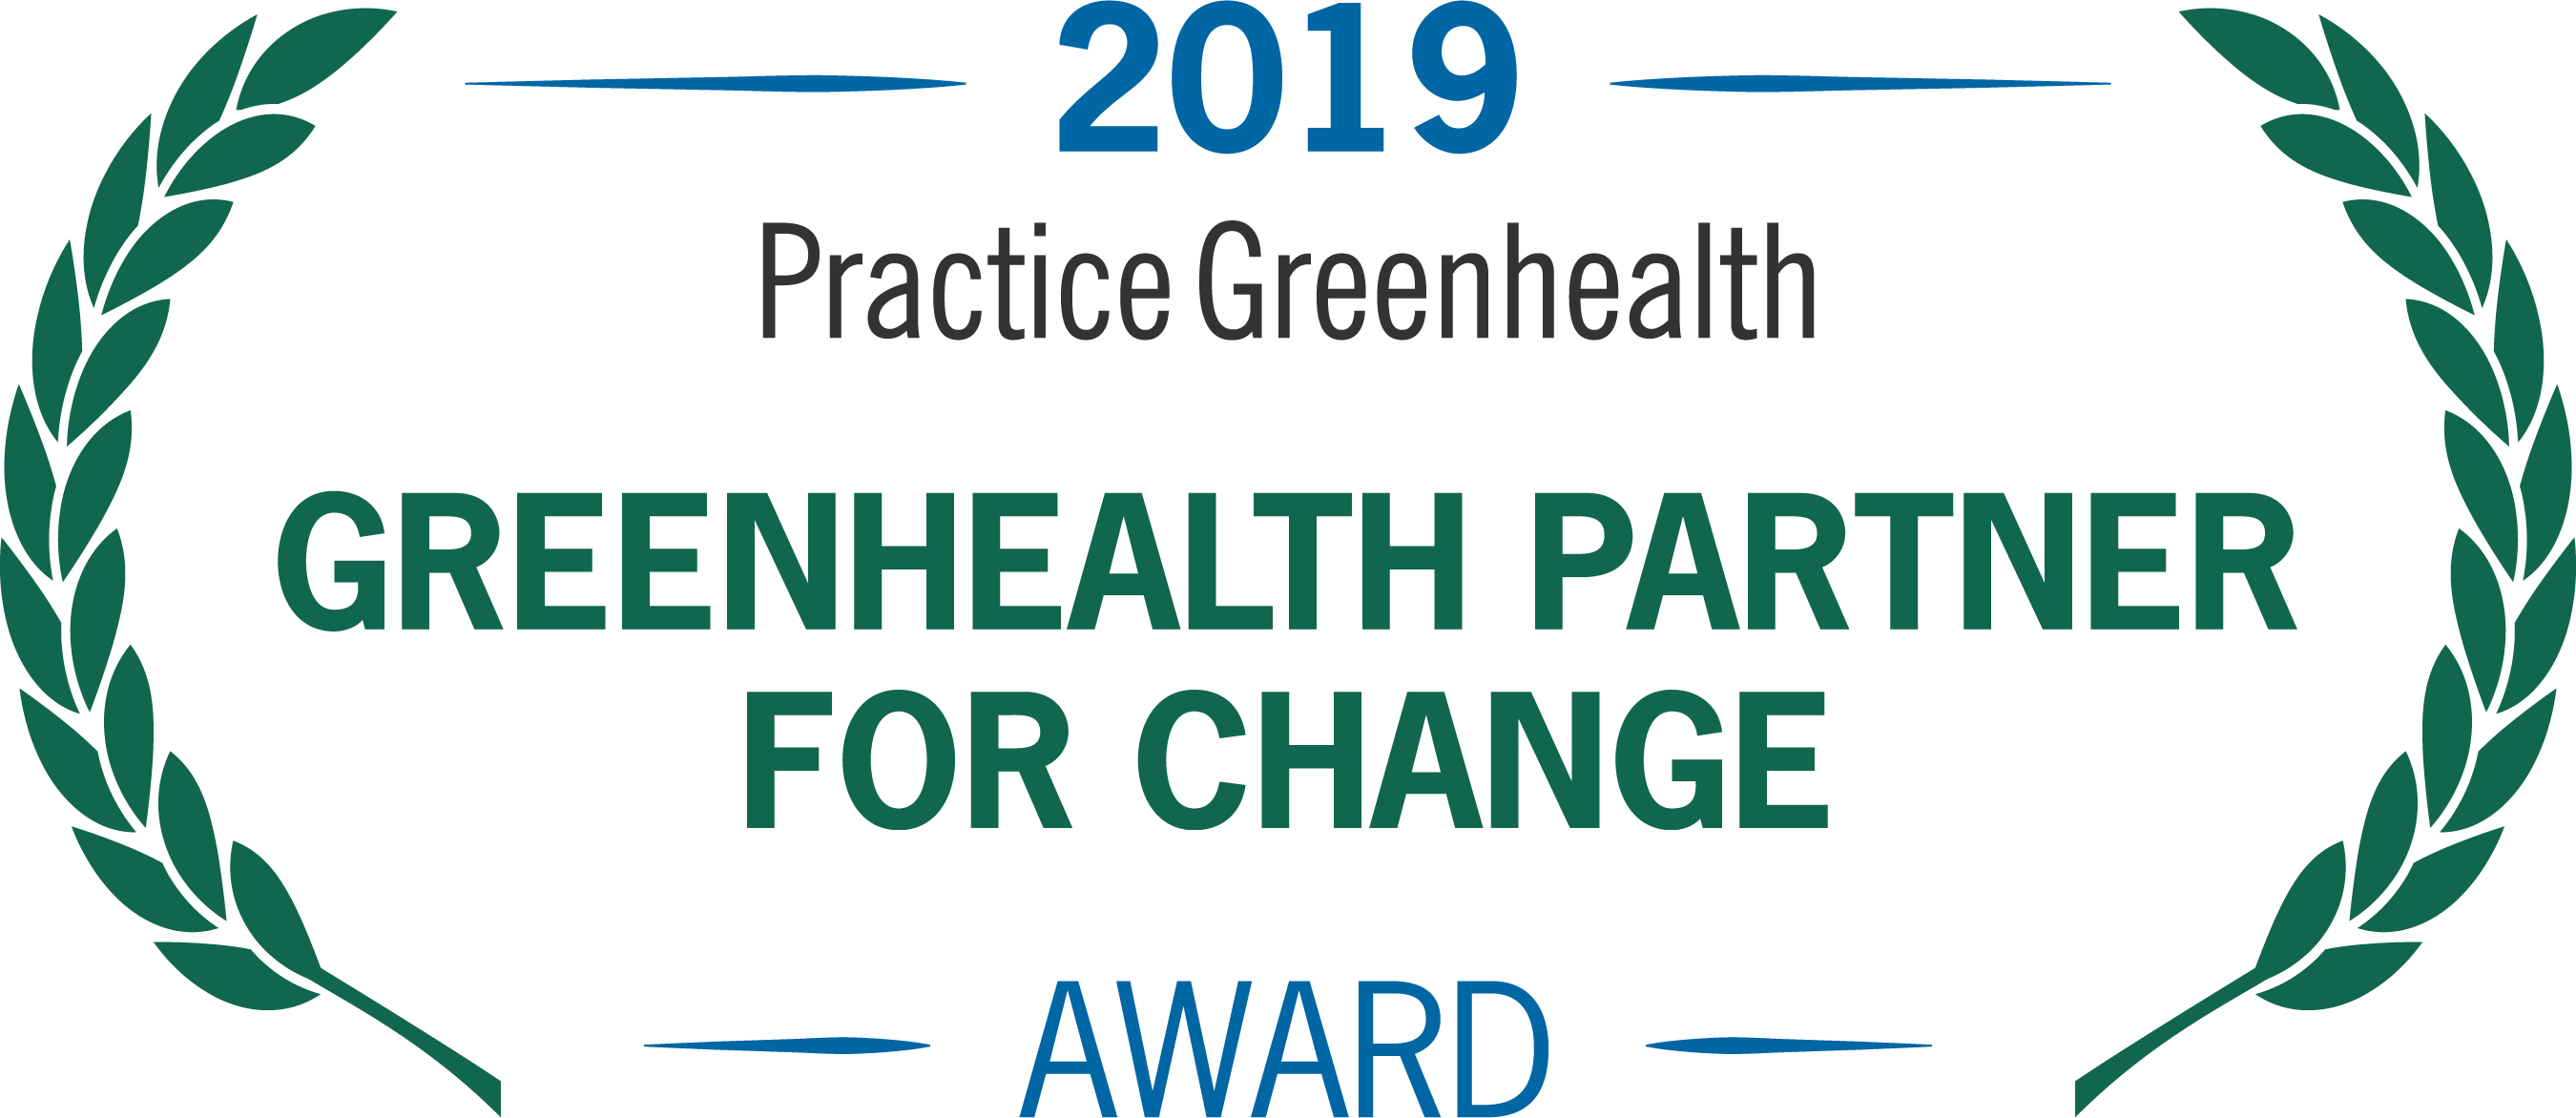 2019 Greenhealth Partner for Change Award